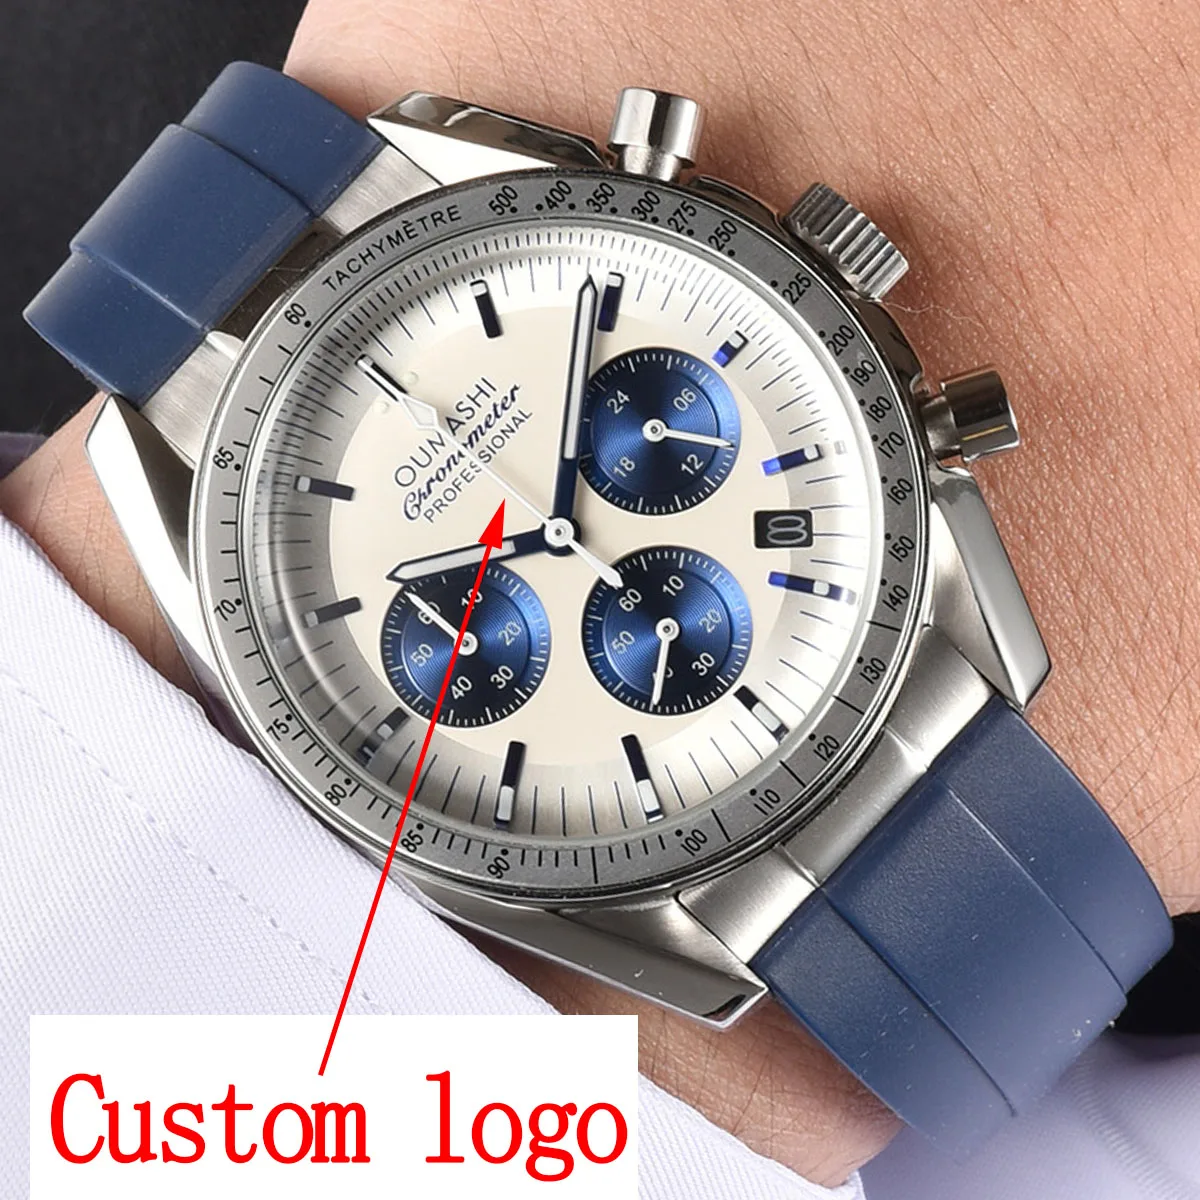 

Мужские водонепроницаемые часы с логотипом на заказ, часы с ремешком на руку, модель vk63 чехол nh35, японские кварцевые часы с хронографом, часы с ремешком на руку nh36